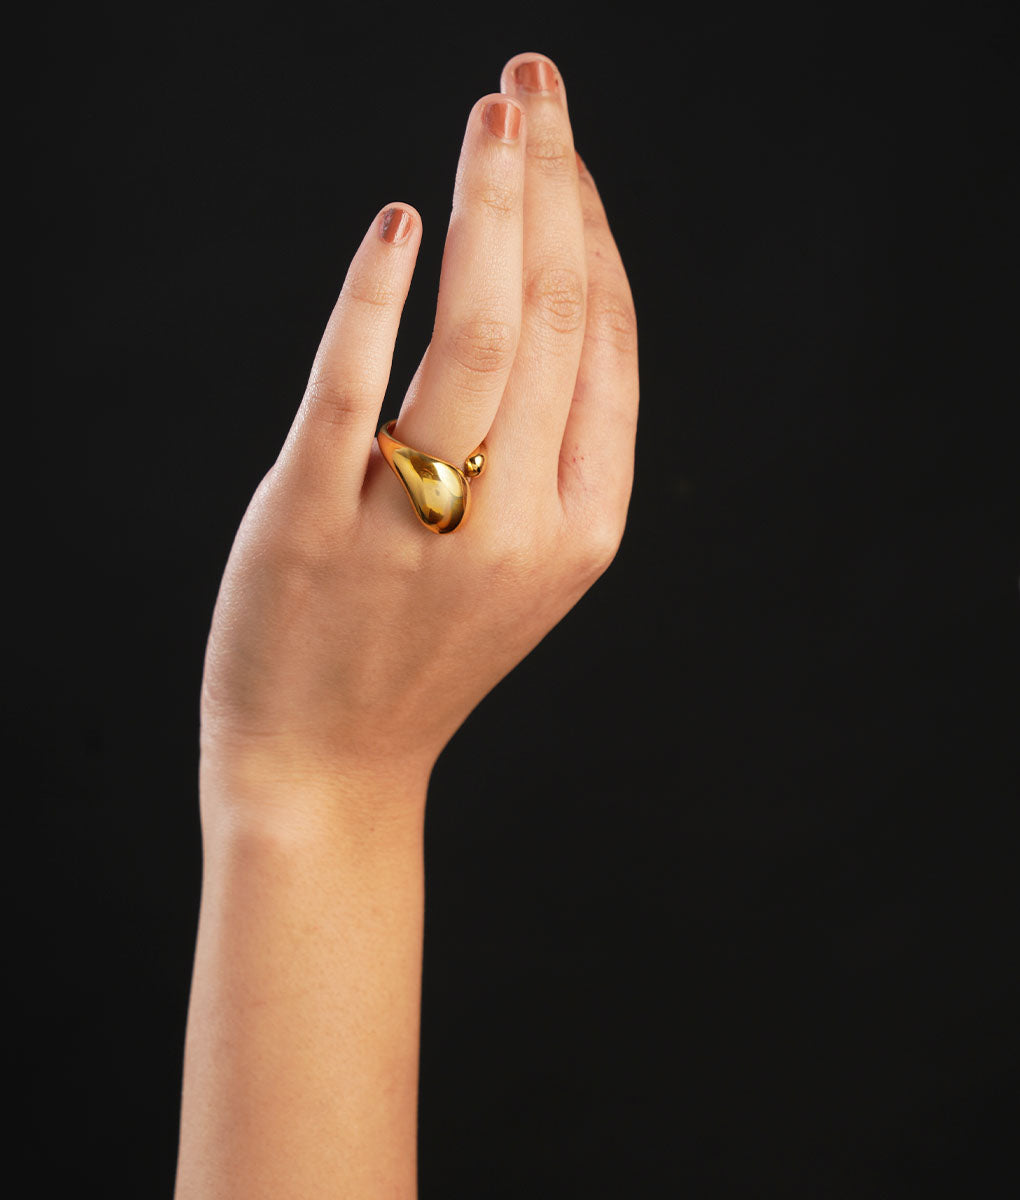 The Zoya Gold Ring